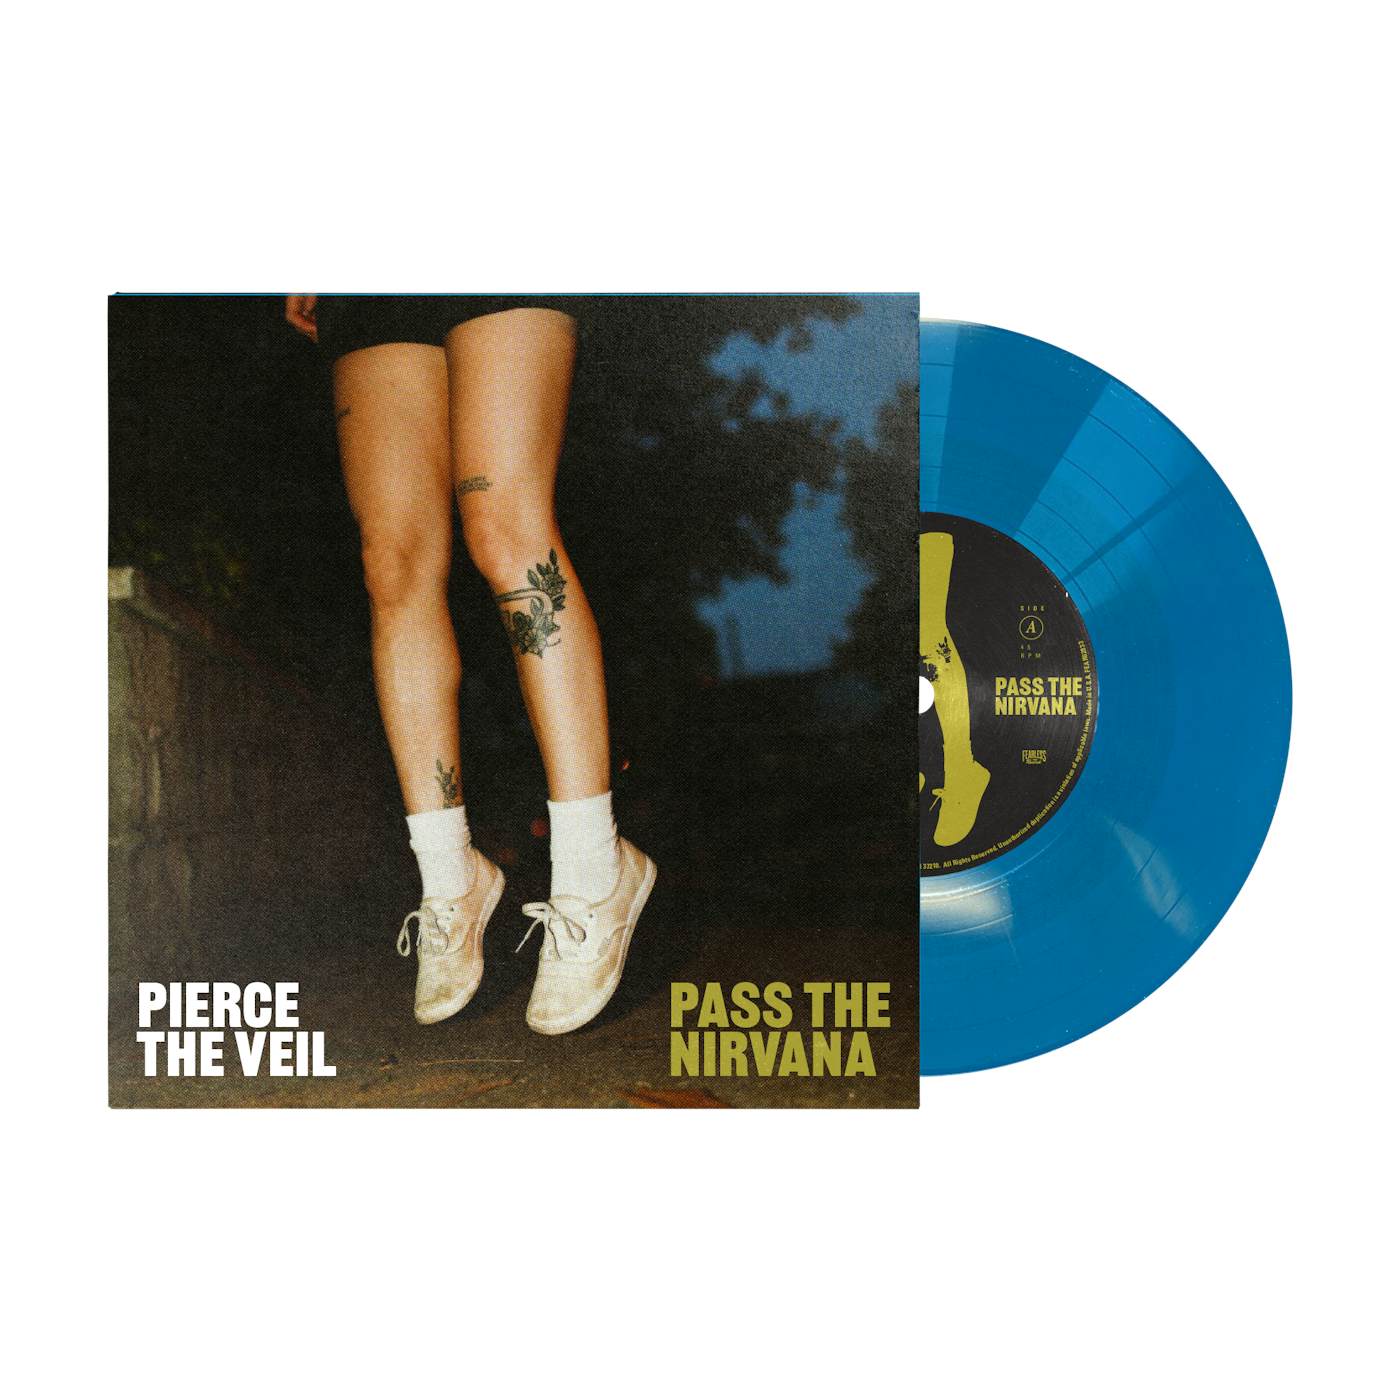 Pierce The Veil "Pass The Nirvana" Turquoise Blue 7"